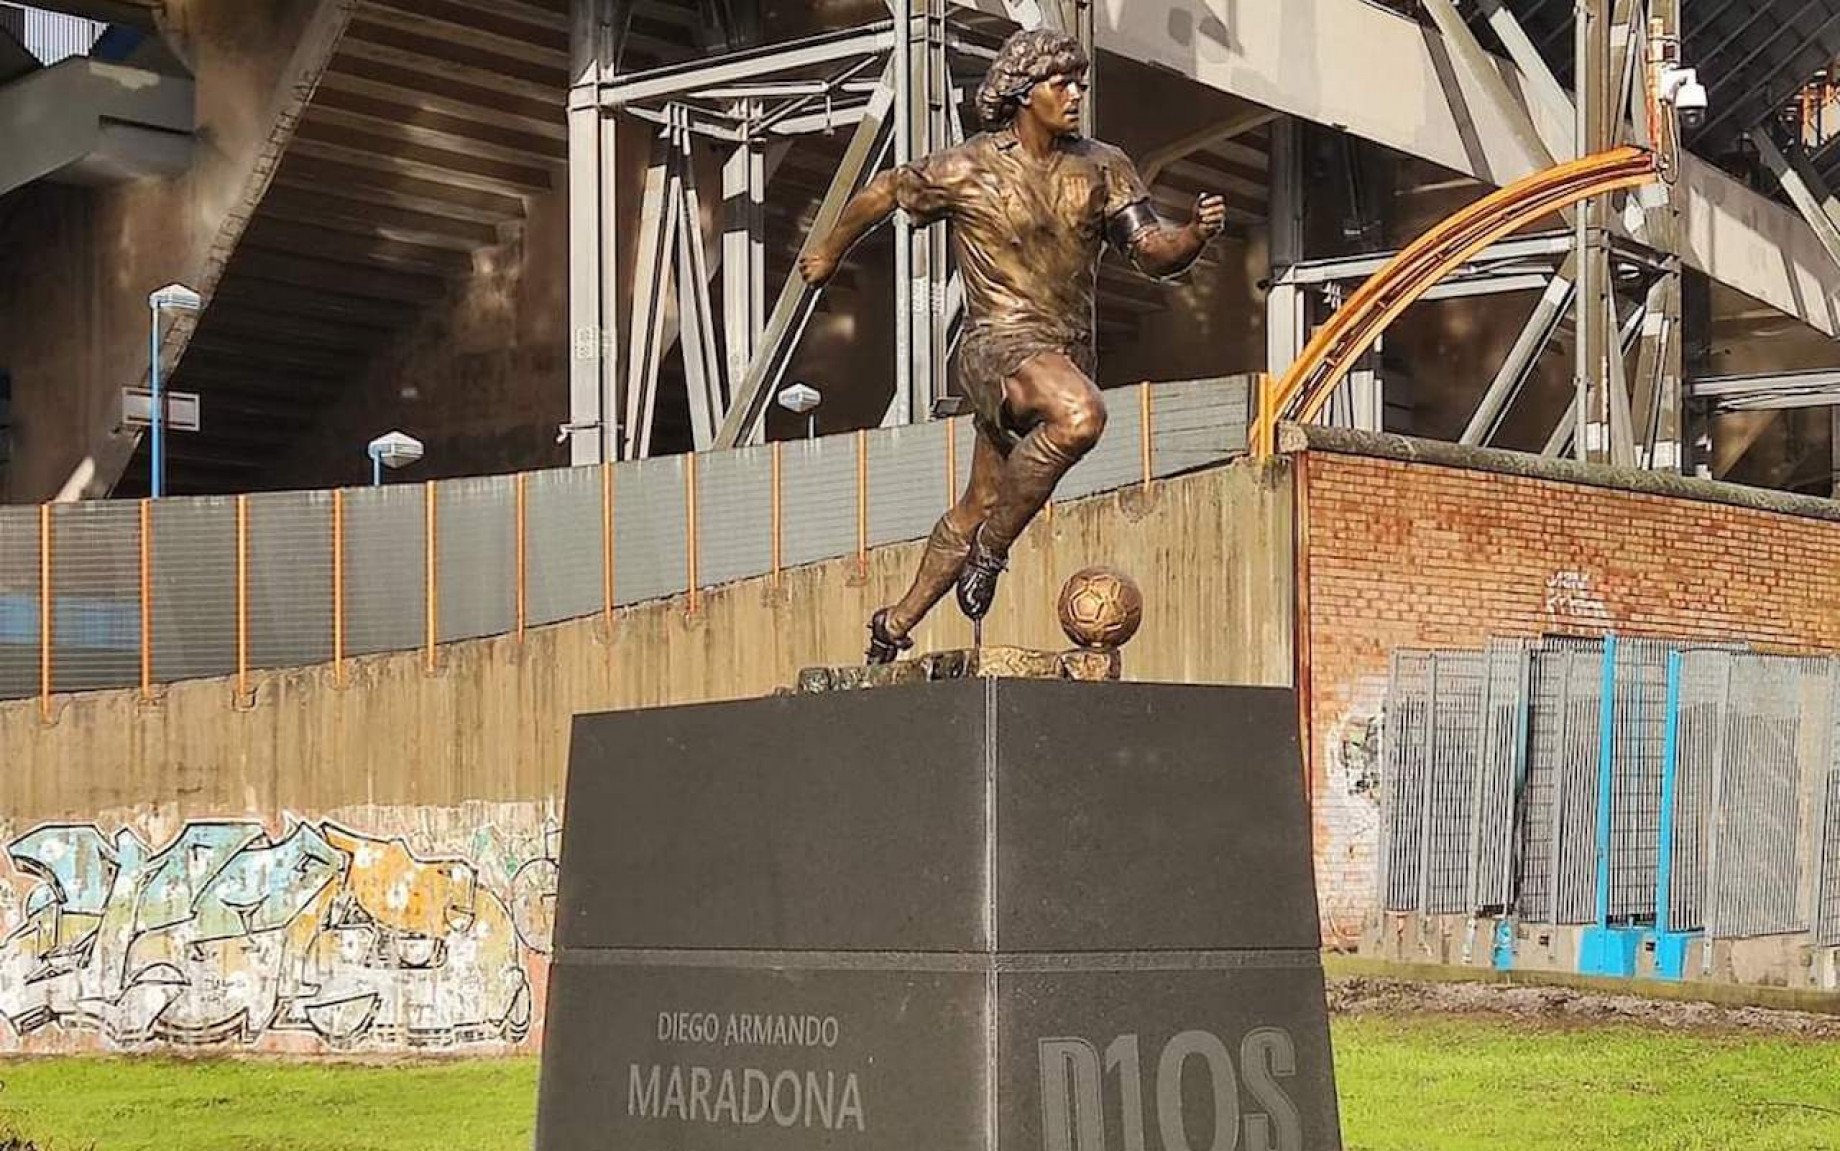 statua-maradona-stadio-25-novembre-2021-gdm-gpo.jpeg